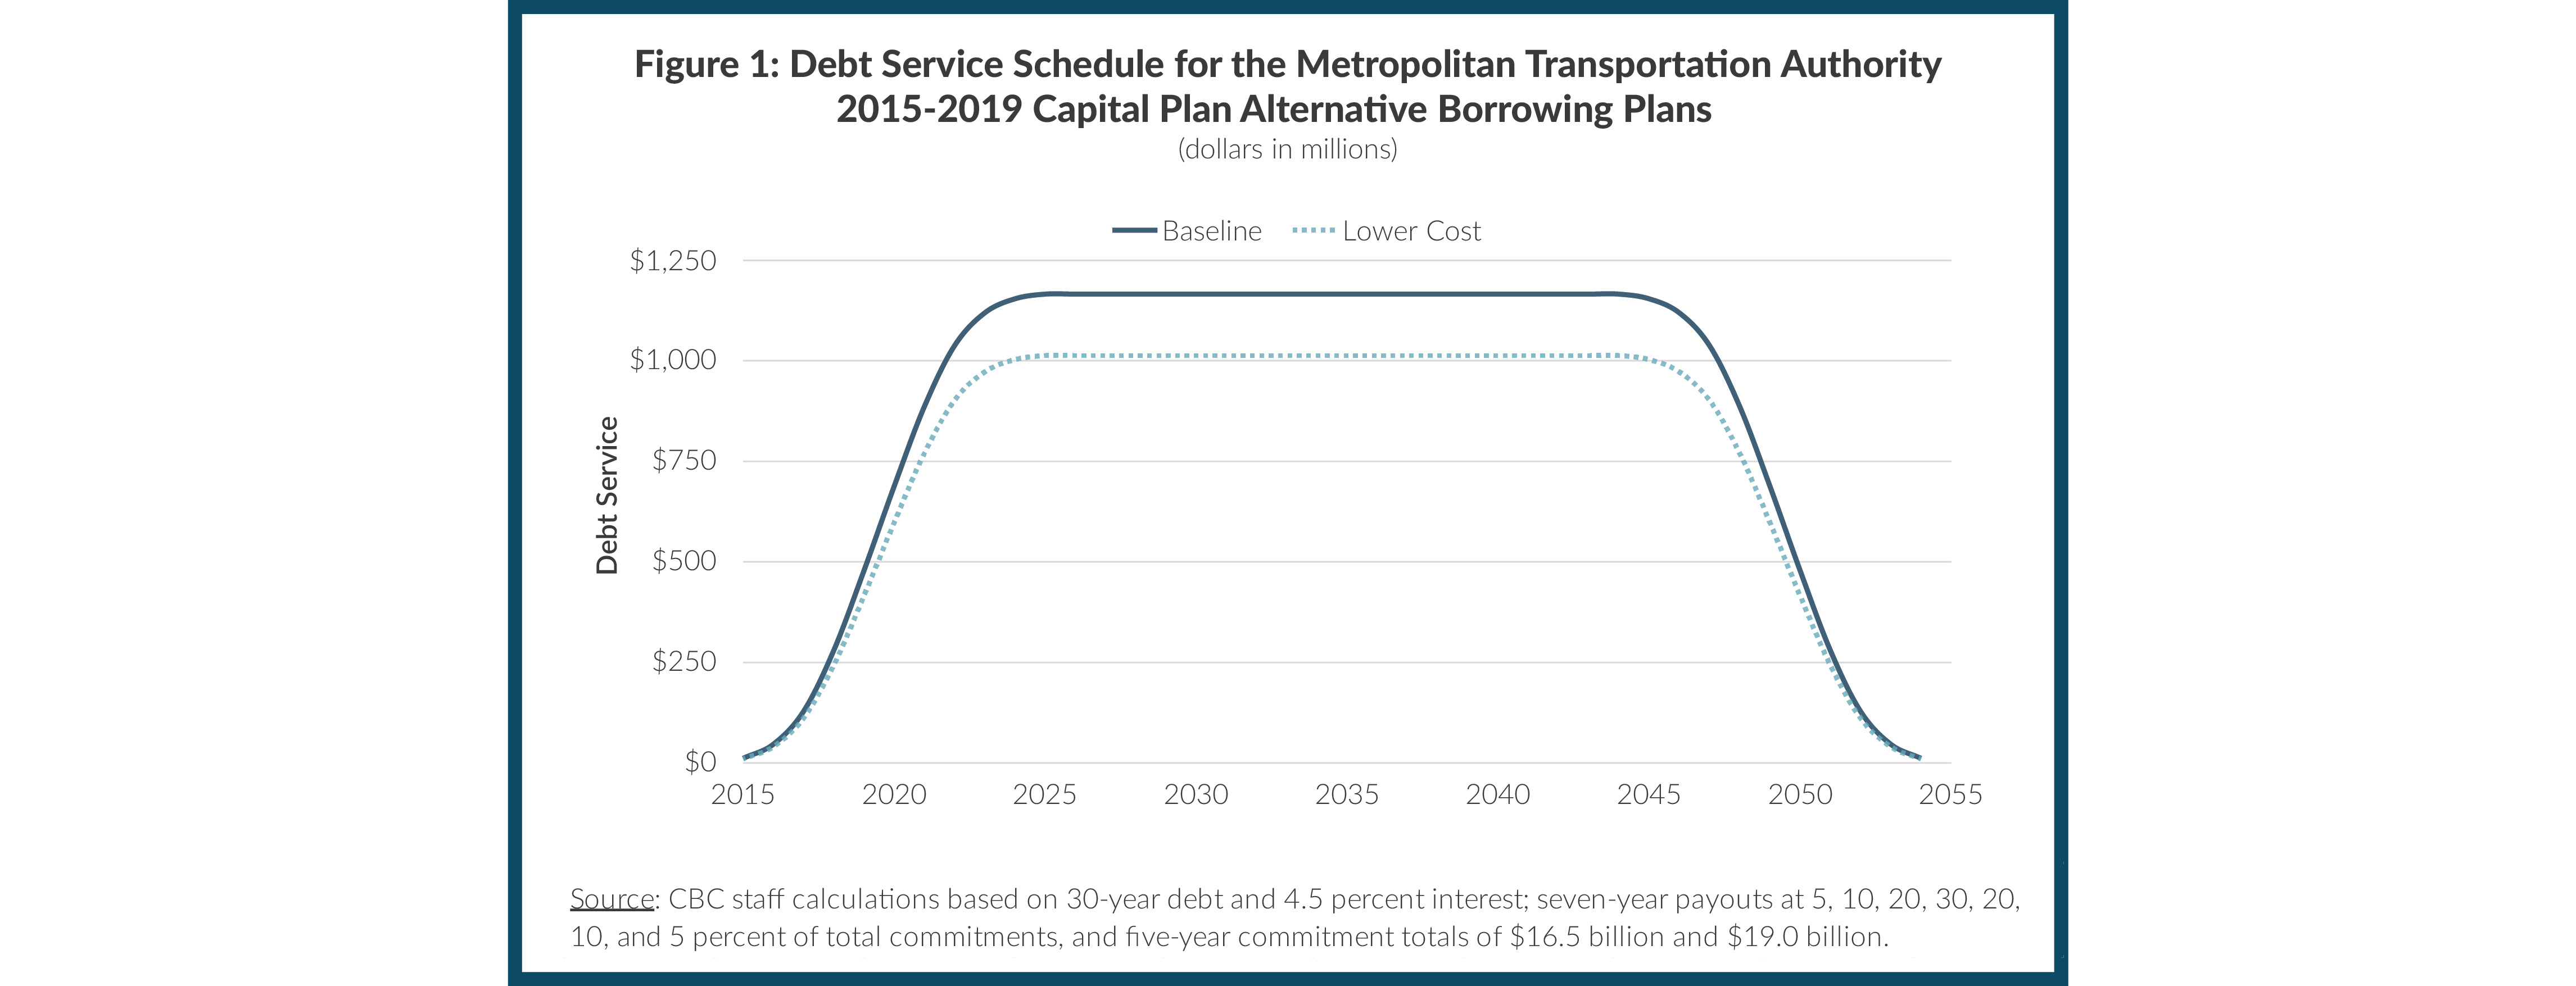 10 Figure 1: Debt Service Schedule for the Metropolitan Transportation Authority 2015-2019 Capital Plan Alternative Borrowing Plans